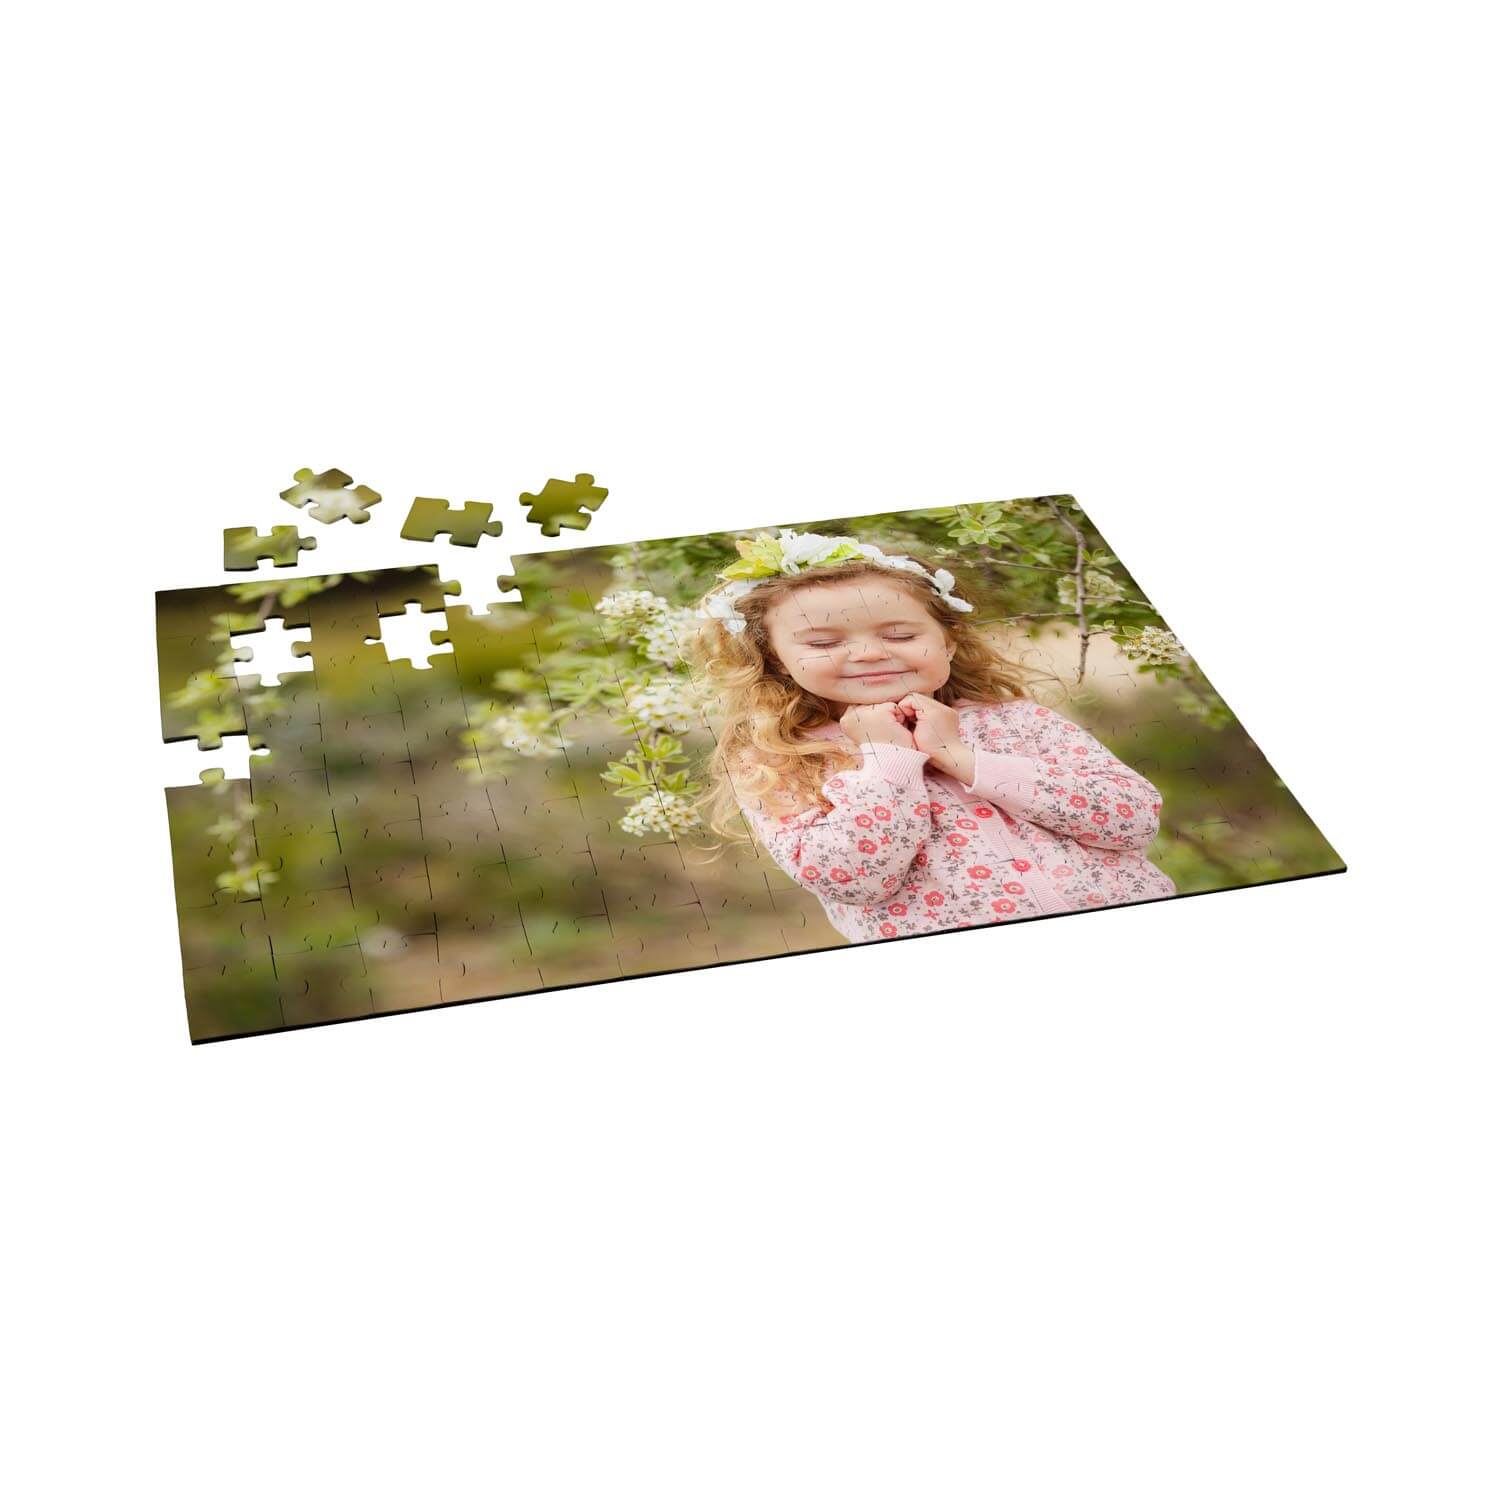 Fotopuzzle individuell bedruckbar mit matt/glänzender Oberfläche, hochkant/quer